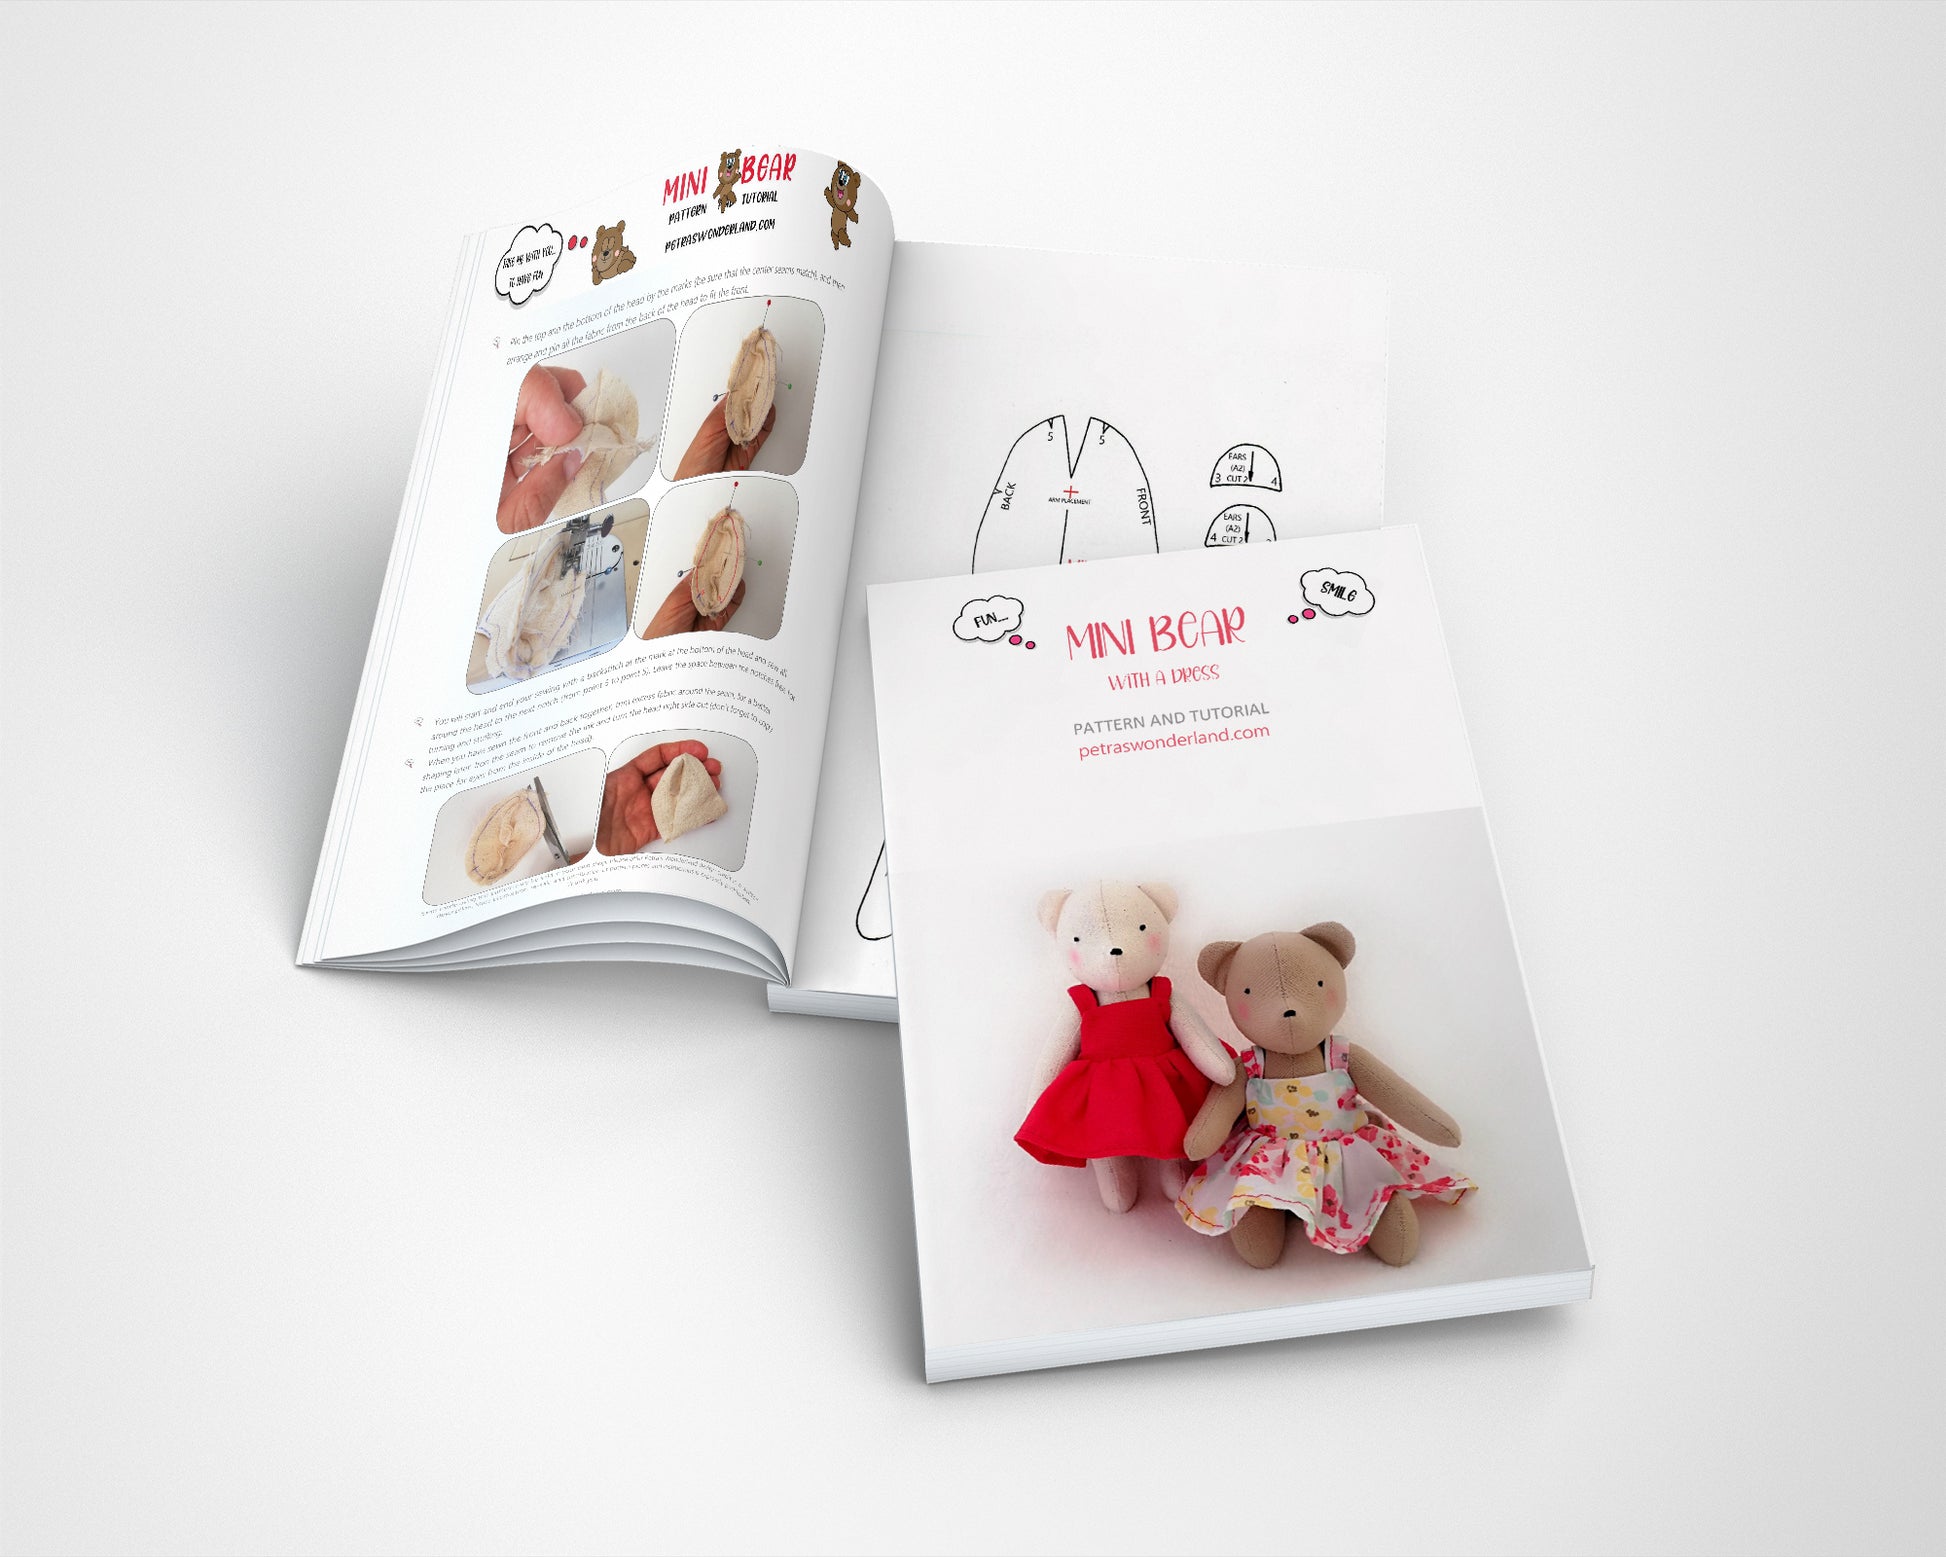 Mini Bear 6 inch - PDF doll sewing pattern and tutorial 08